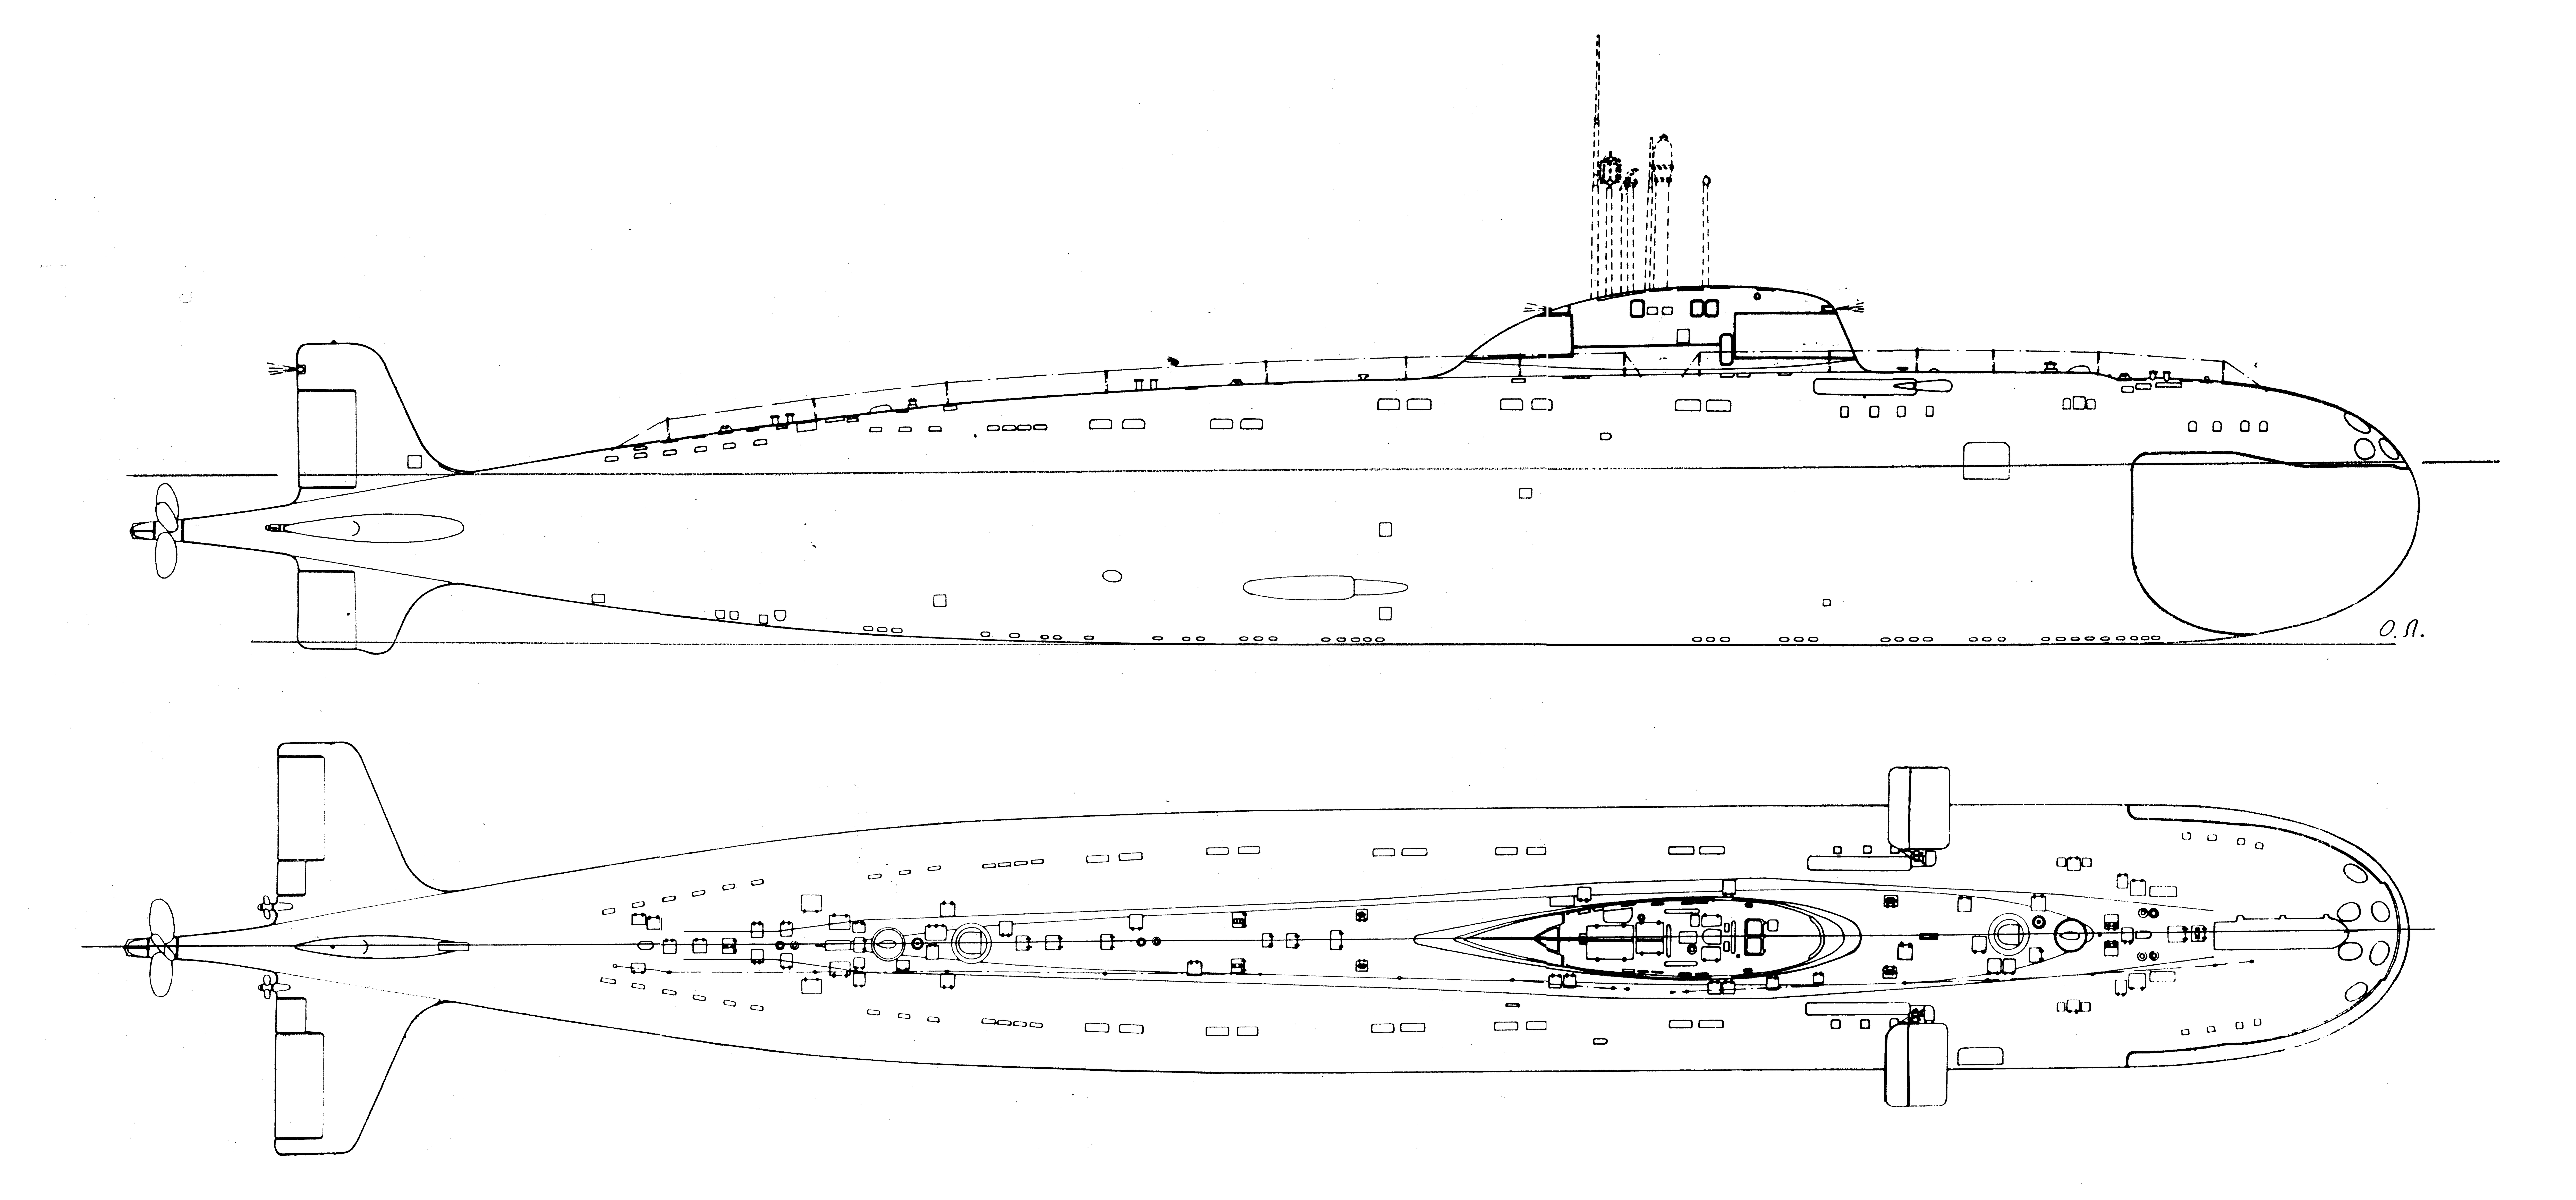 Victor-class submarine blueprint